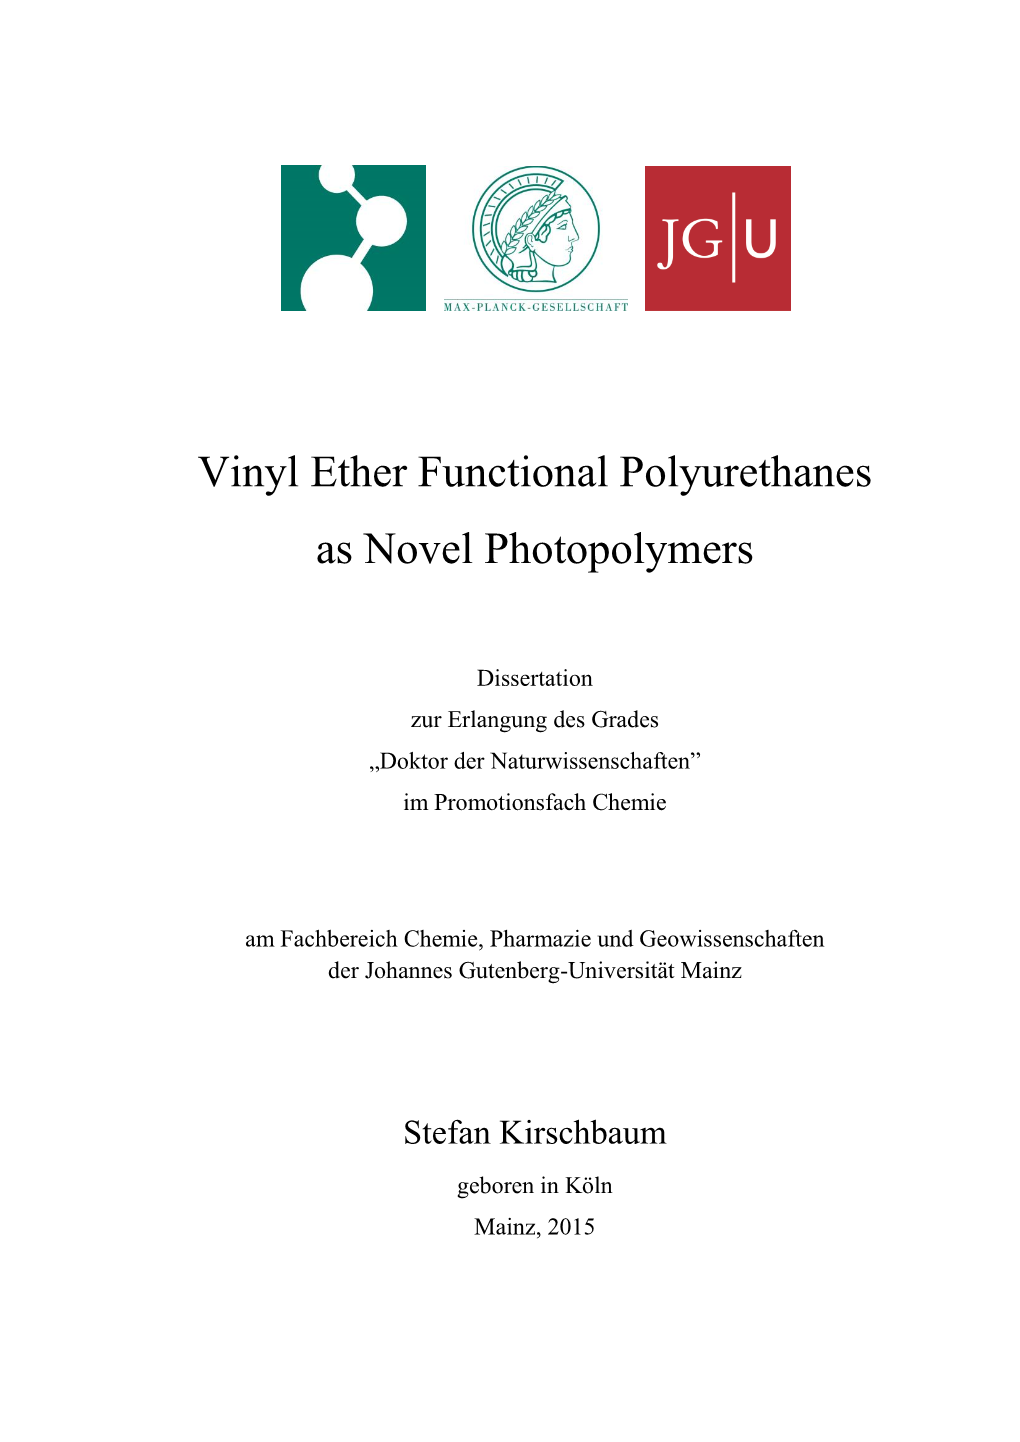 Vinyl Ether Functional Polyurethanes As Novel Photopolymers